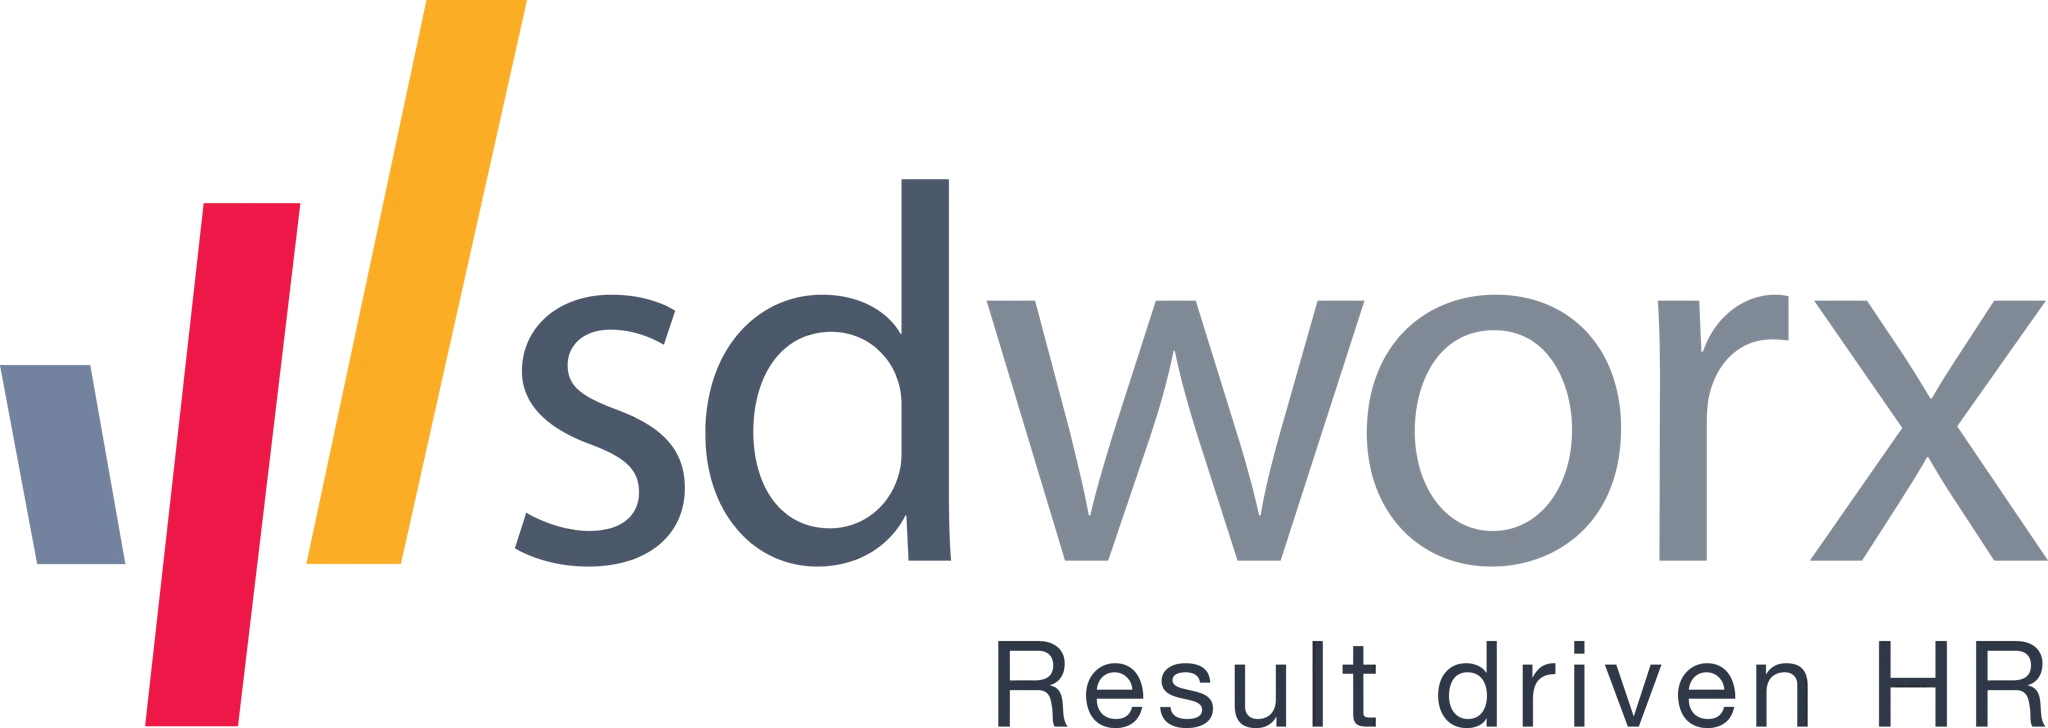 Sdworx logo